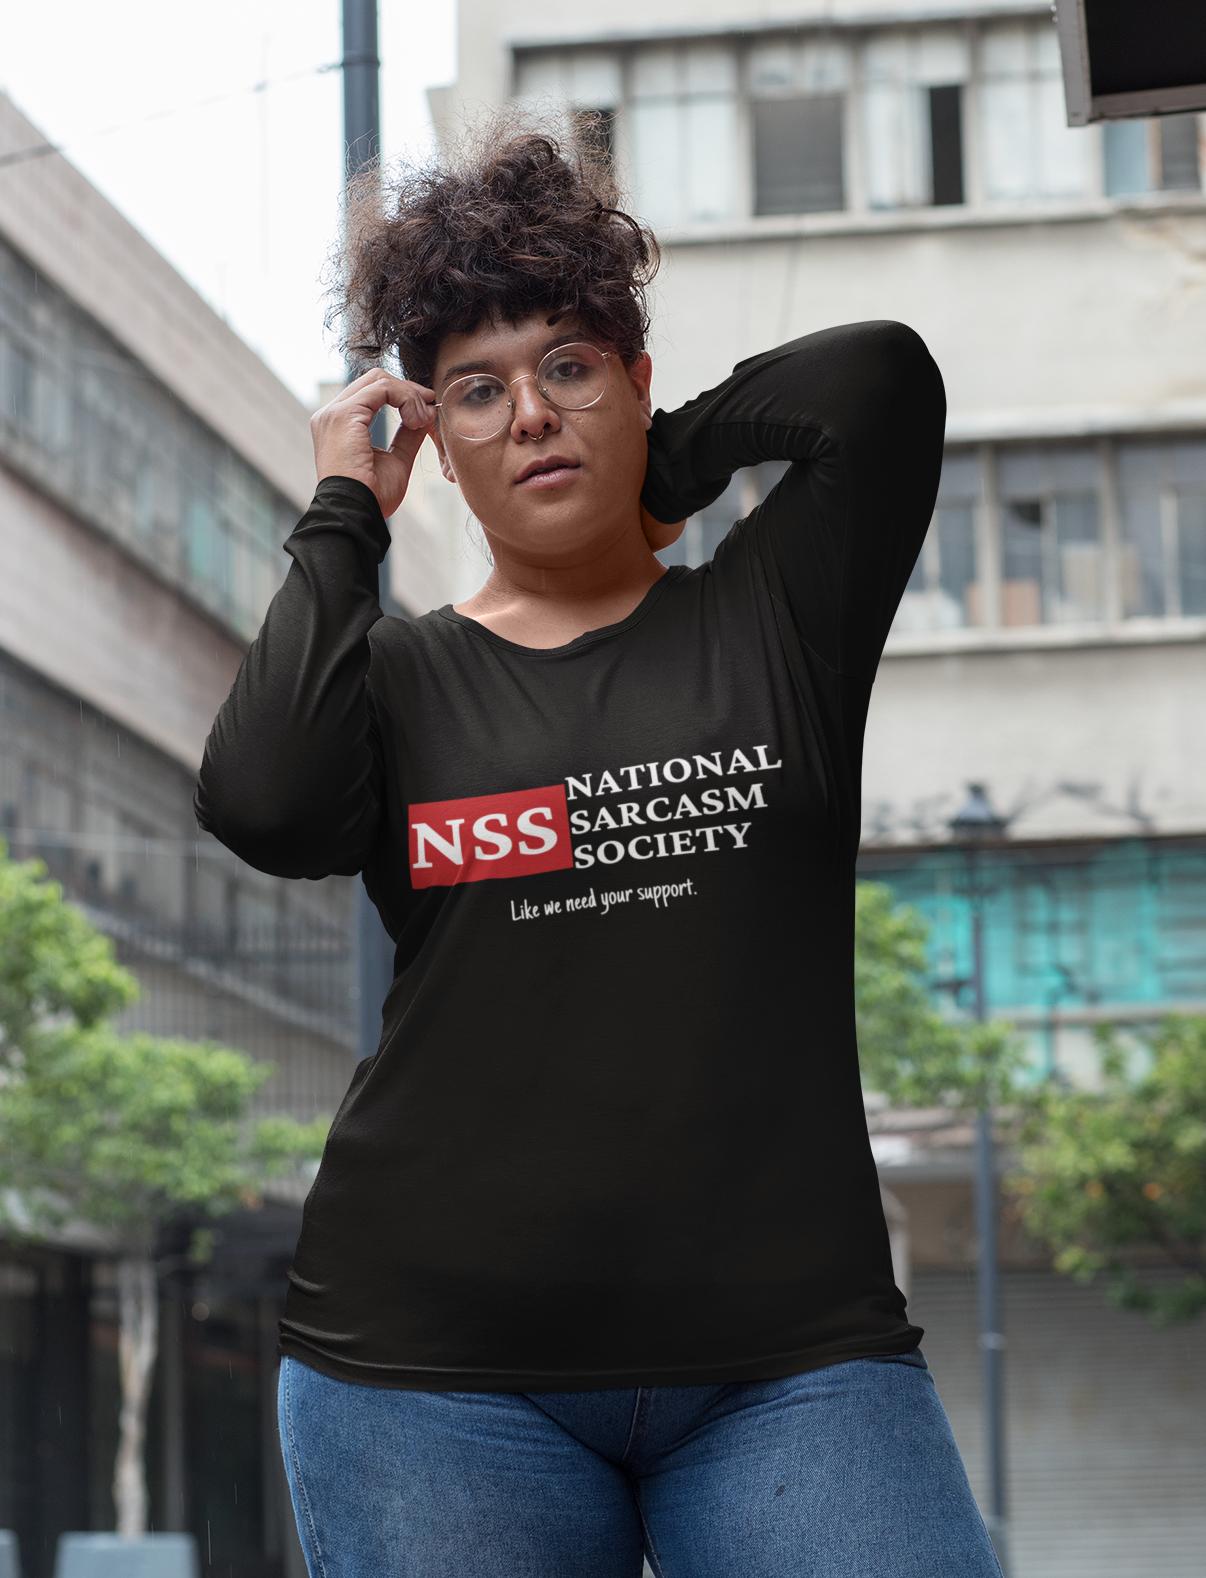 National Sarcasm Society | Unisex Long Sleeve Tee